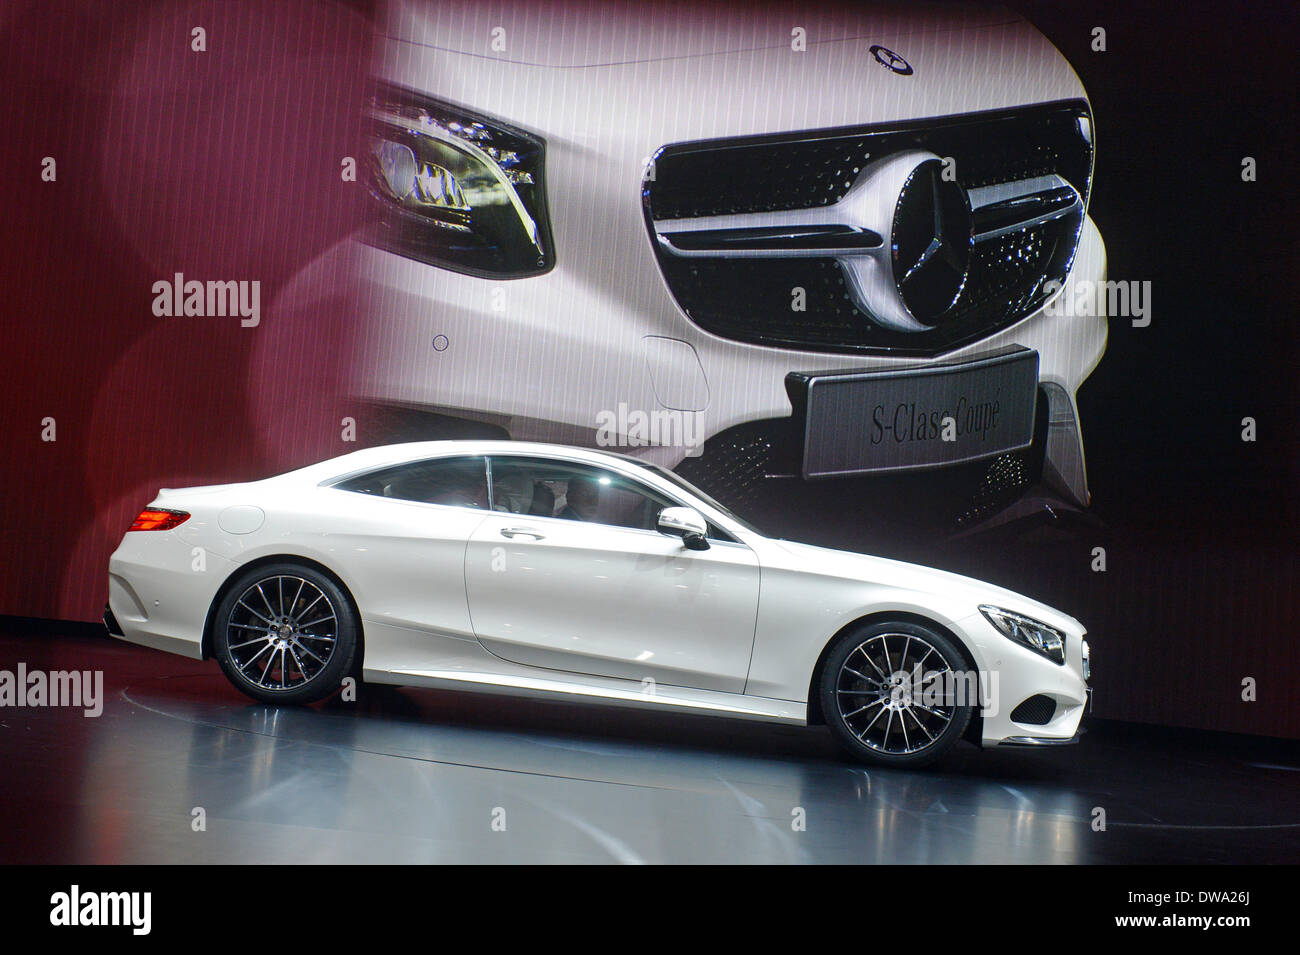 Mercedes Benz S Klasse Coupé S Klasse Stockfotos und -bilder Kaufen - Alamy